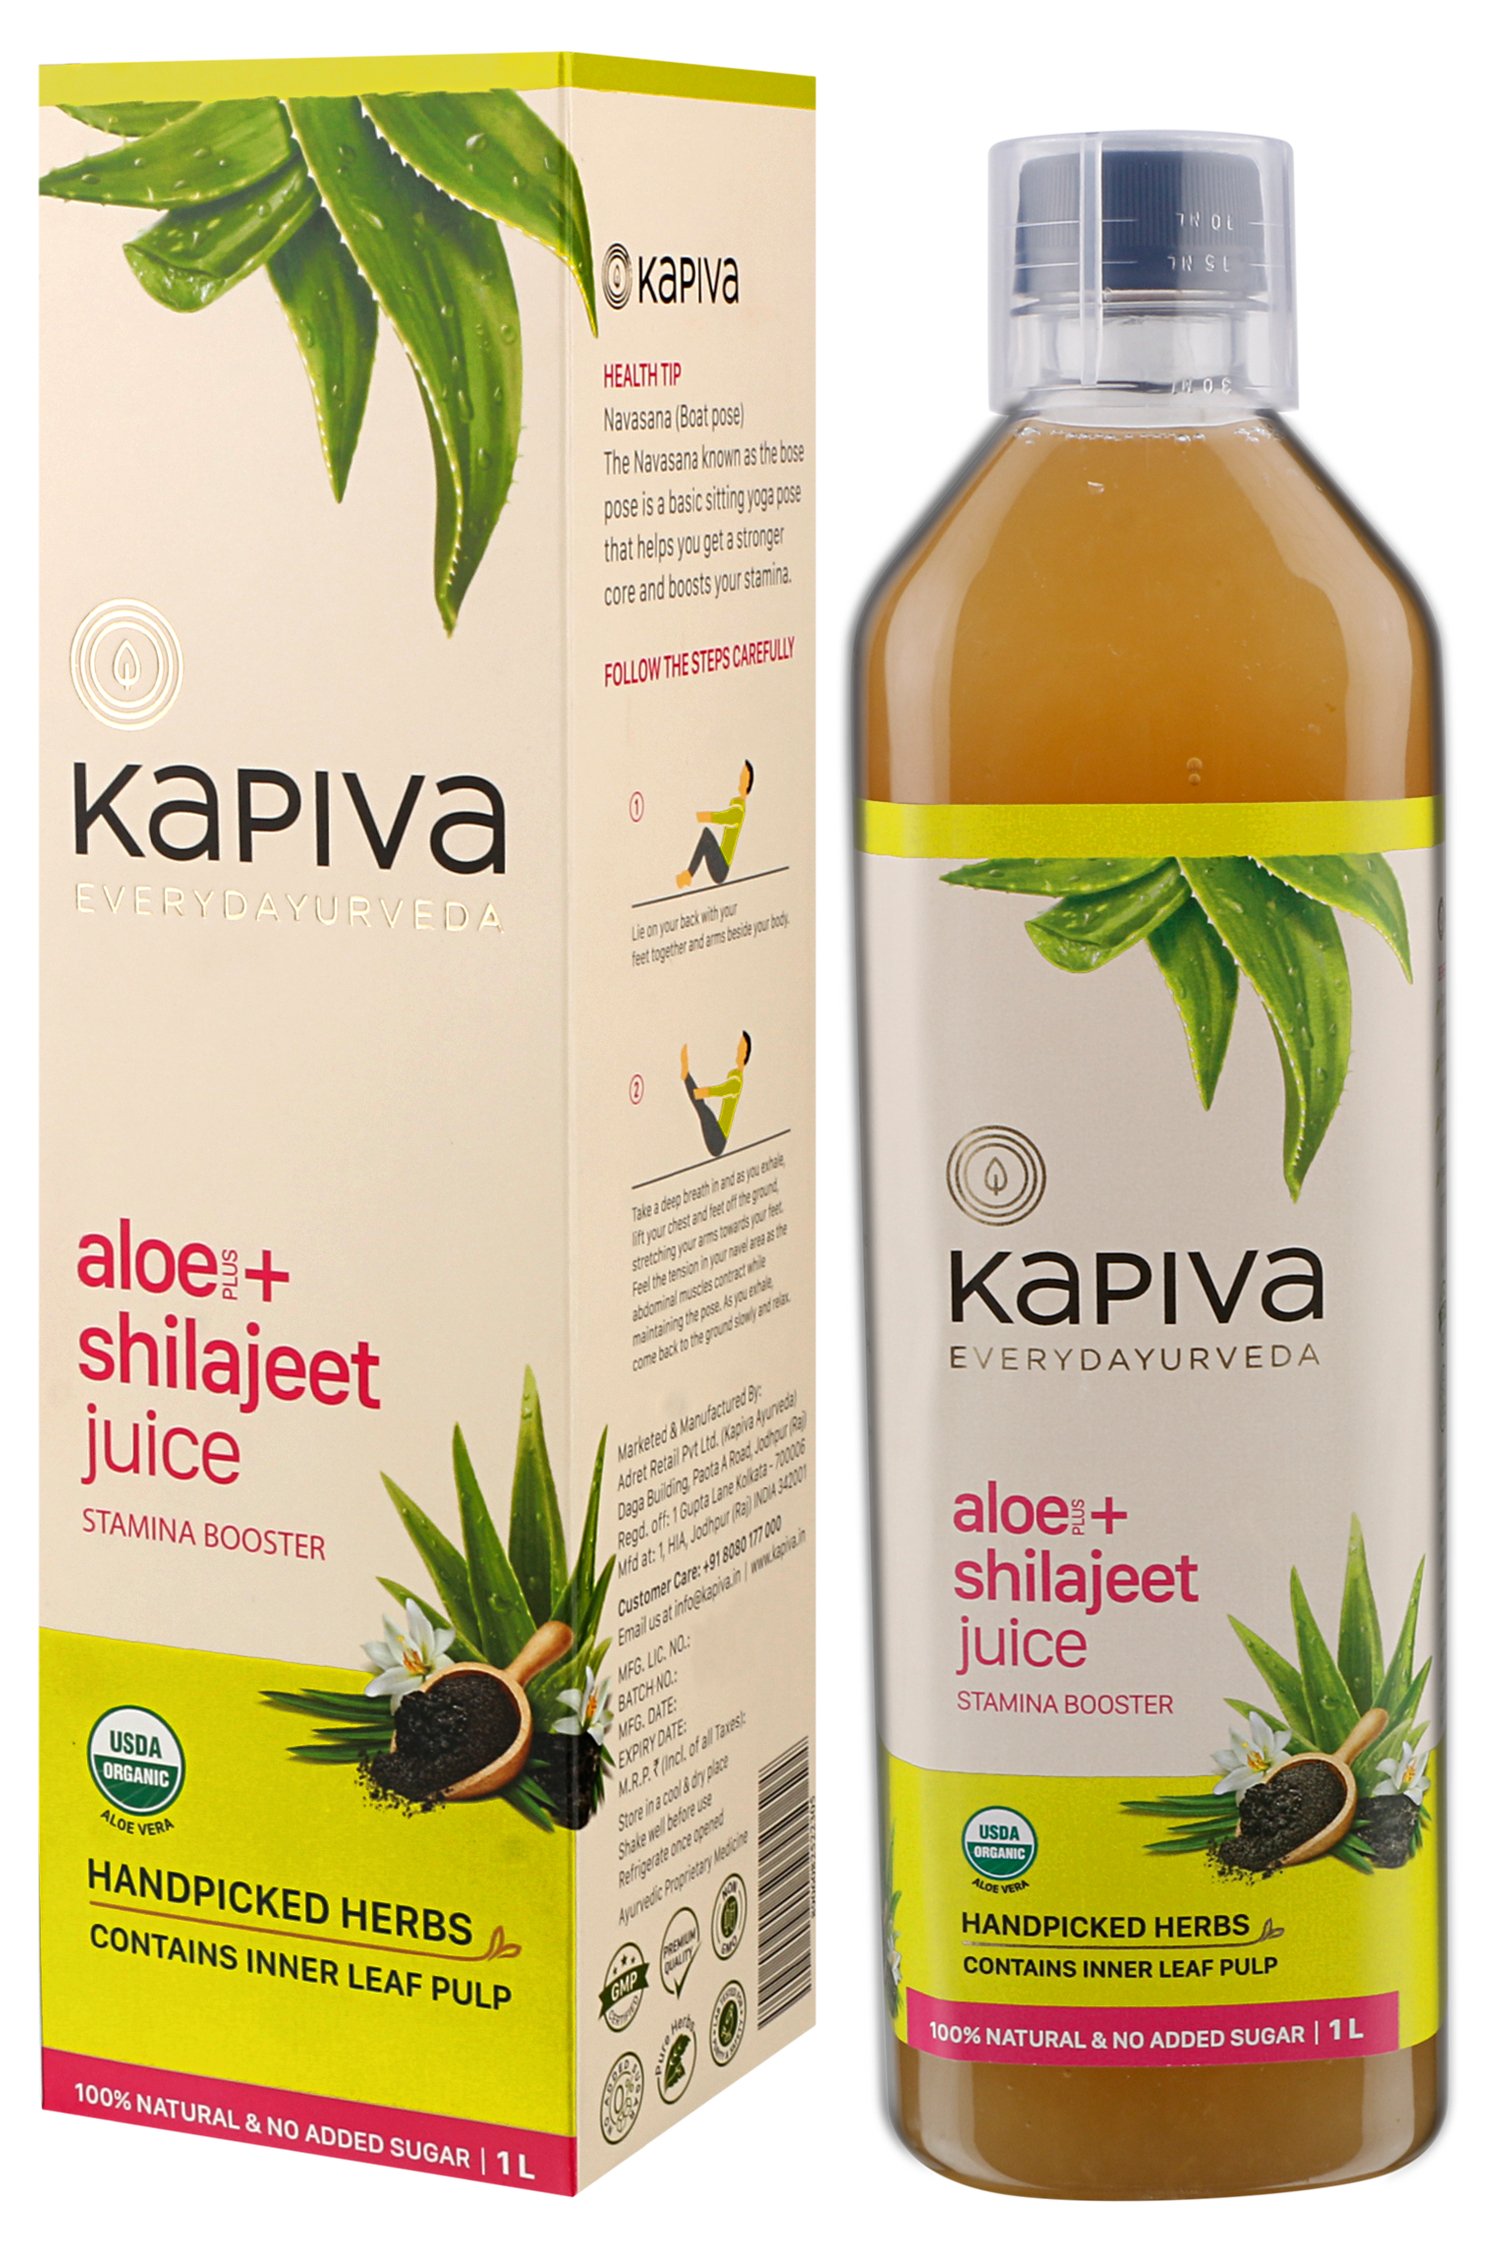 Buy Kapiva Aloe + Shilajeet Juice at Best Price Online